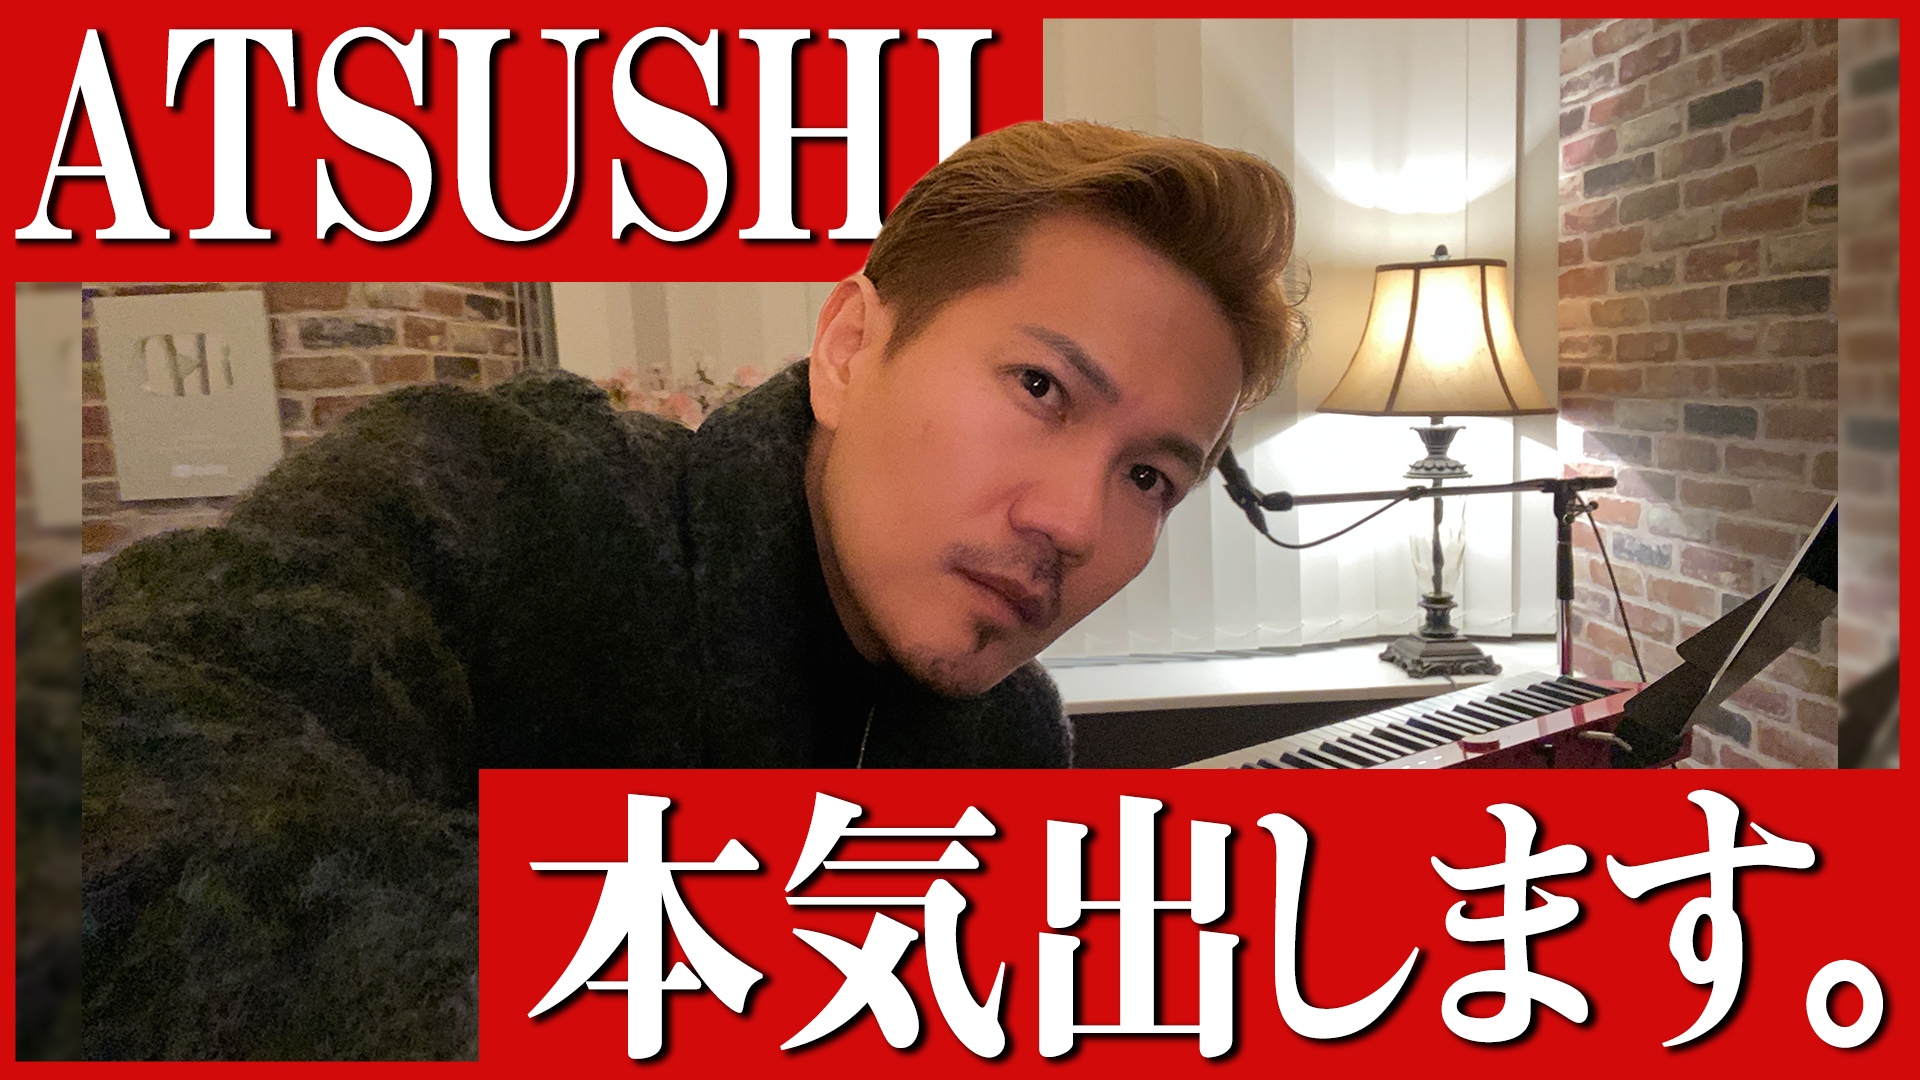 Exile Atsushi が今伝えたい事 弾き語り配信をyoutubeチャンネルで行います News 映像制作会社 Vecks